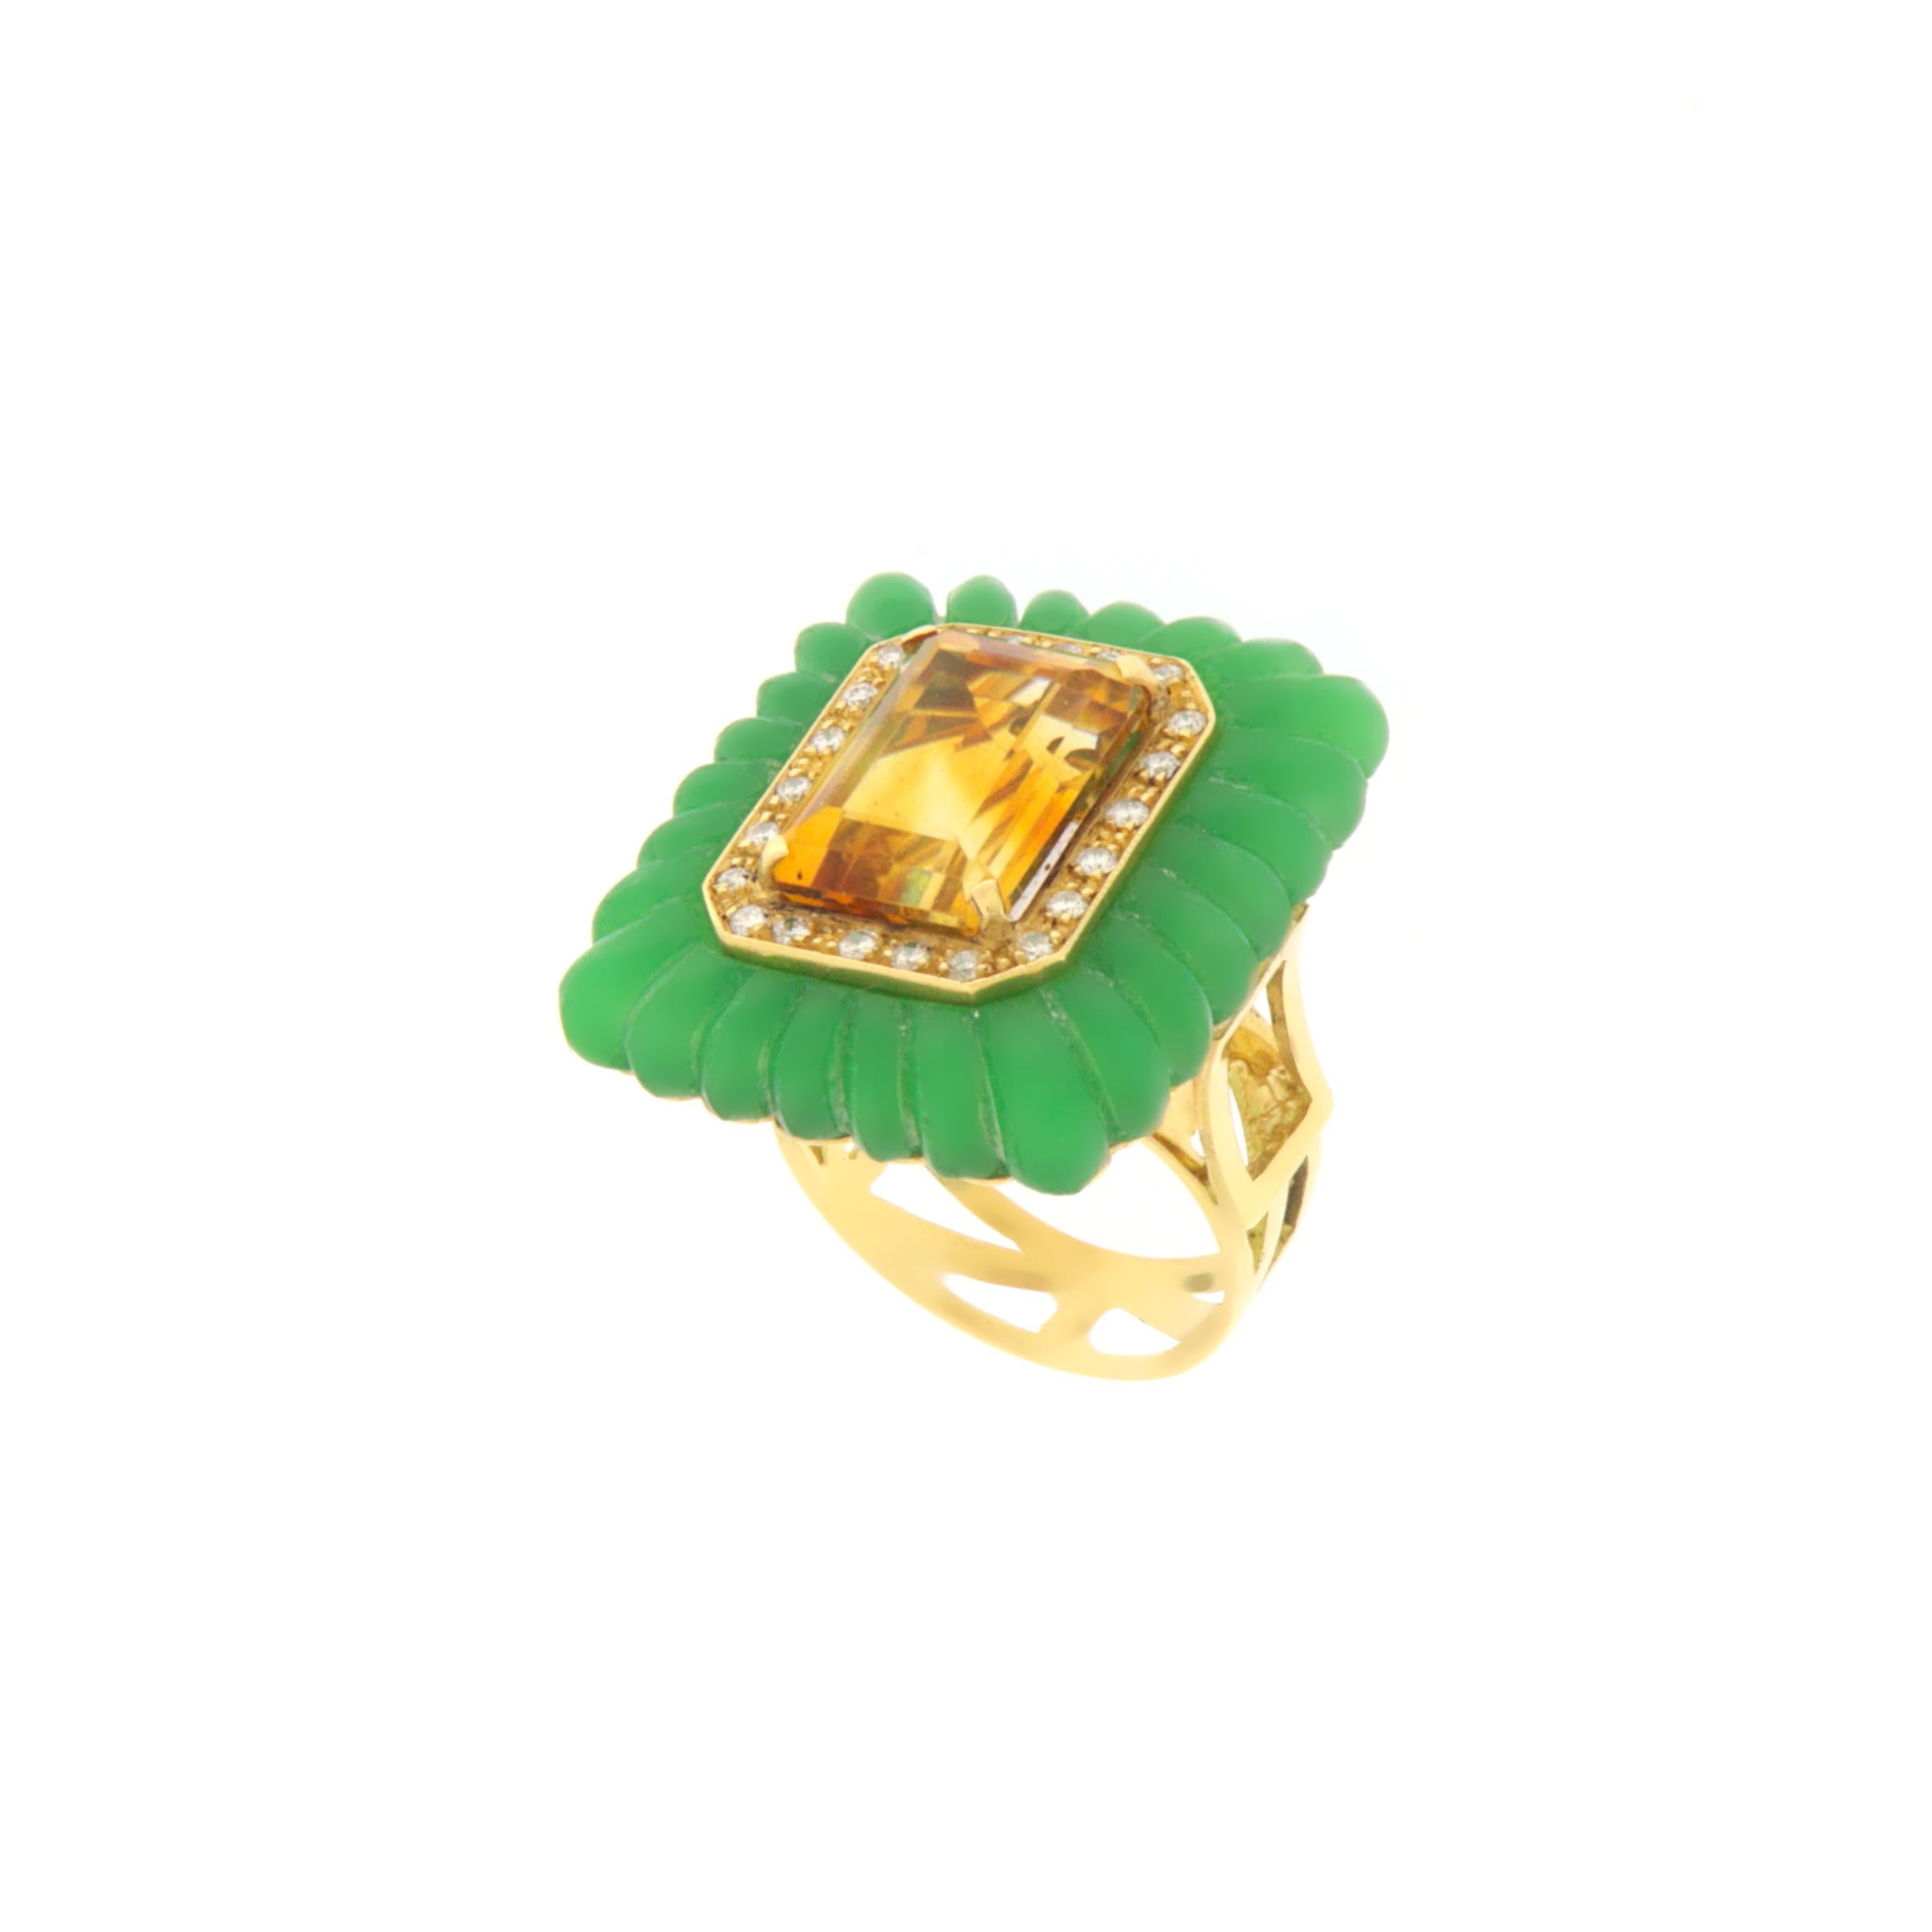 Brilliant Cut Diamonds Citrine Agate 18 Karat Yellow Gold Cocktail Ring For Sale